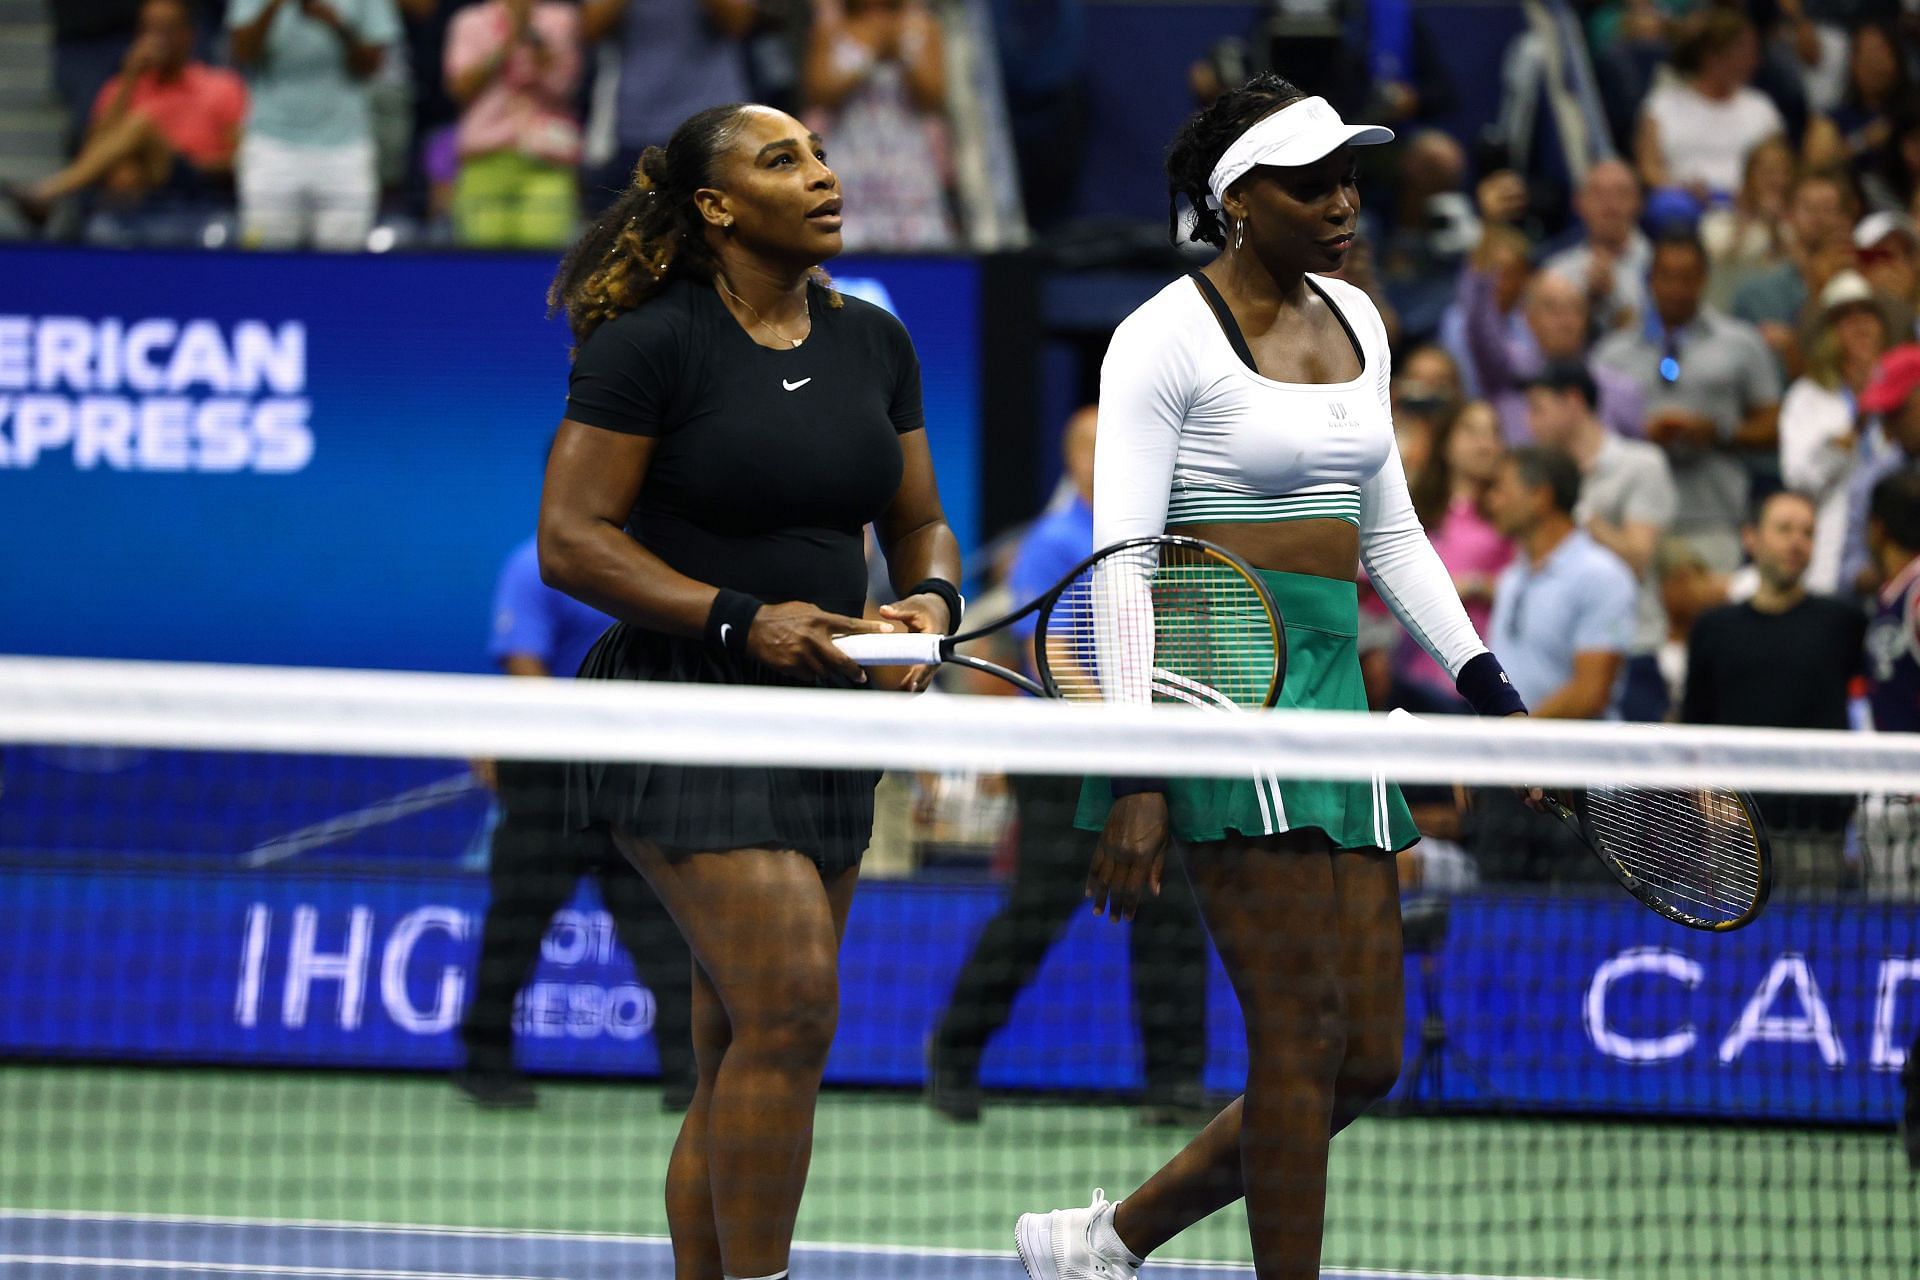 Serena Williams and Venus Williams at the 2022 US Open